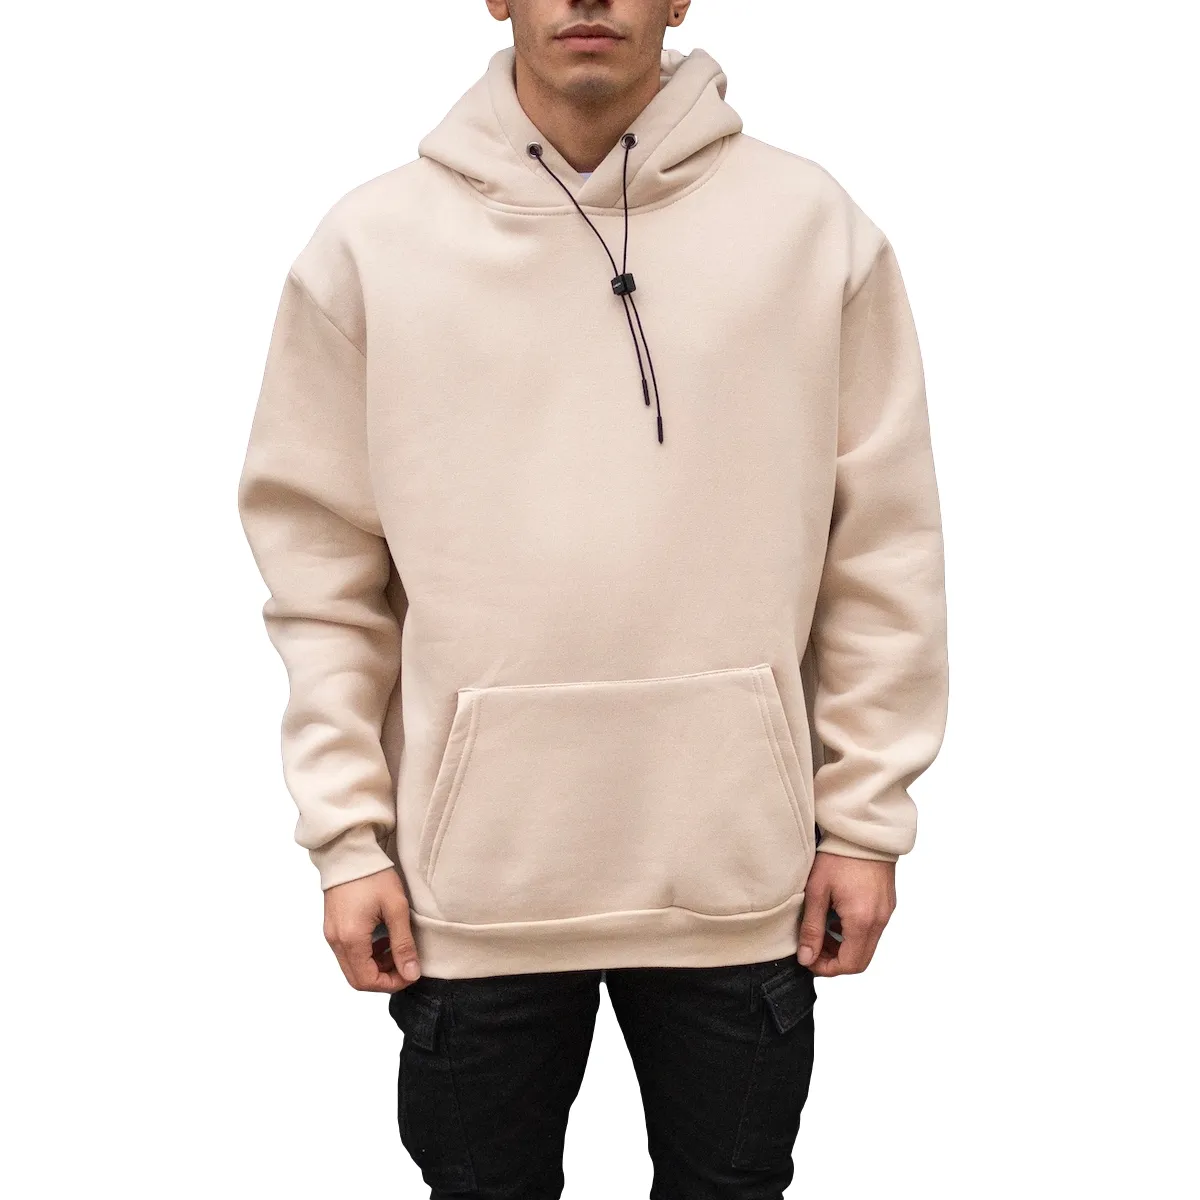 oversize 100% cotton mens oversize basic sweatshirt hoodie with kangaroo new style good best price wholesale offer trend 2020